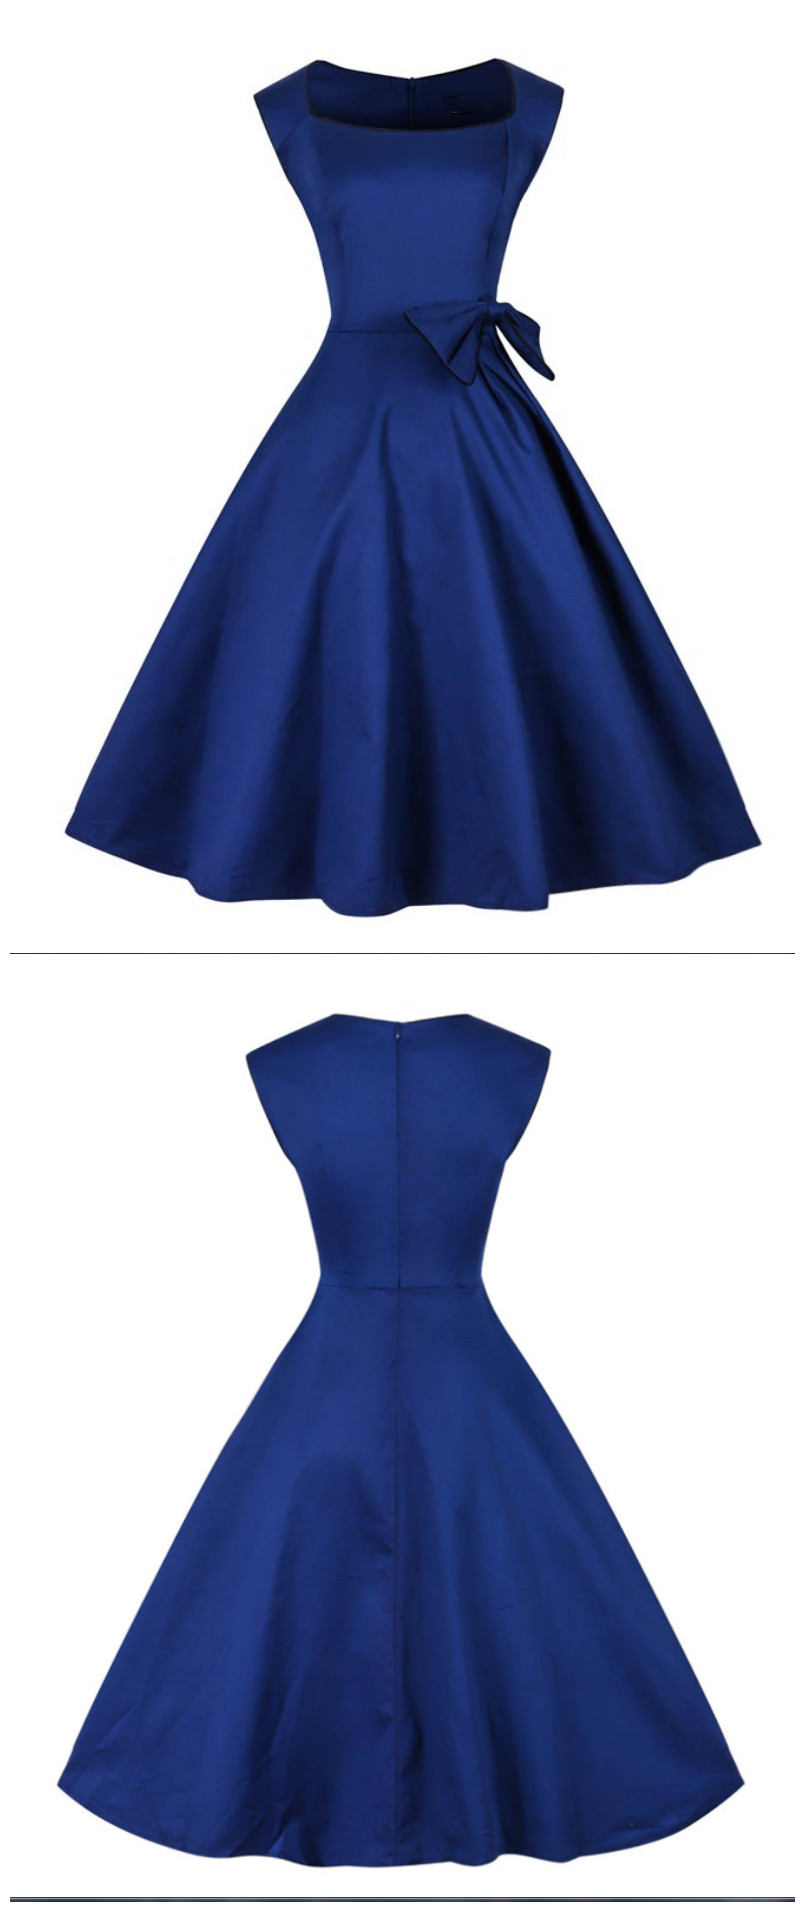 Navy Blue Short Satin Homecoming Dress, Cap Sleeve Mini Dress,homecoming Dress